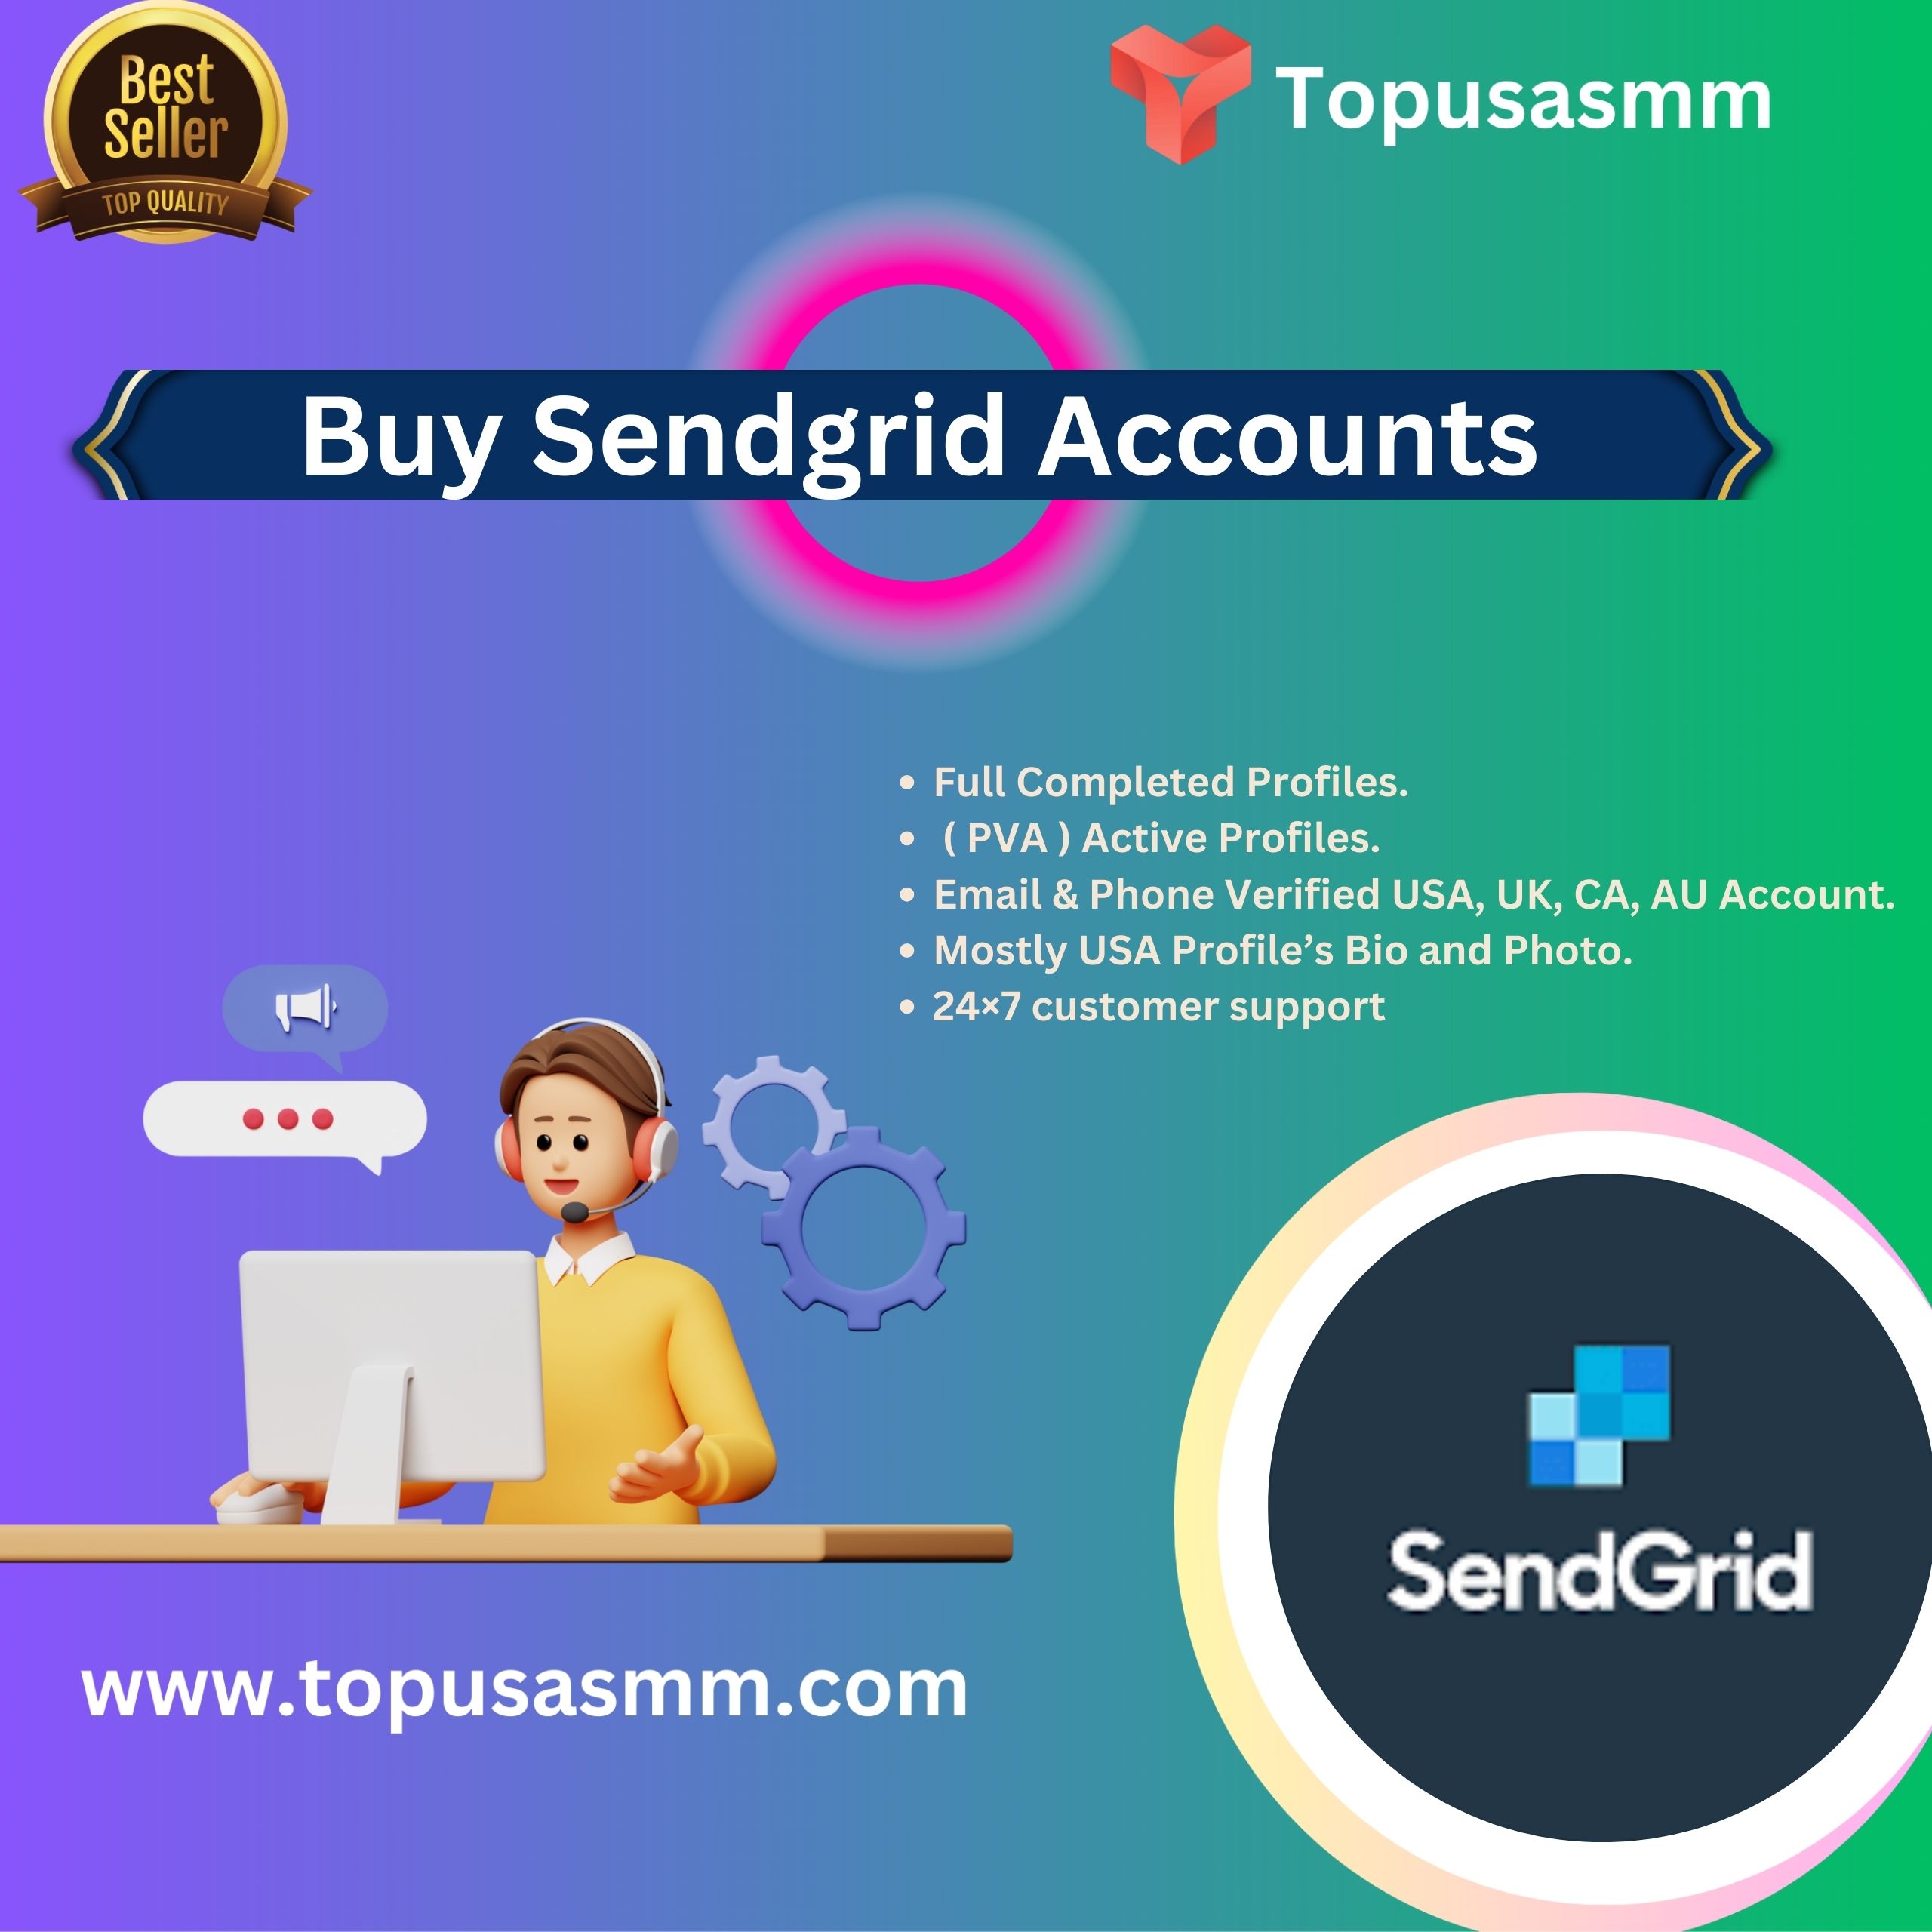 Buy Sendgrid Accounts - 100% Top Quality verified Accounts